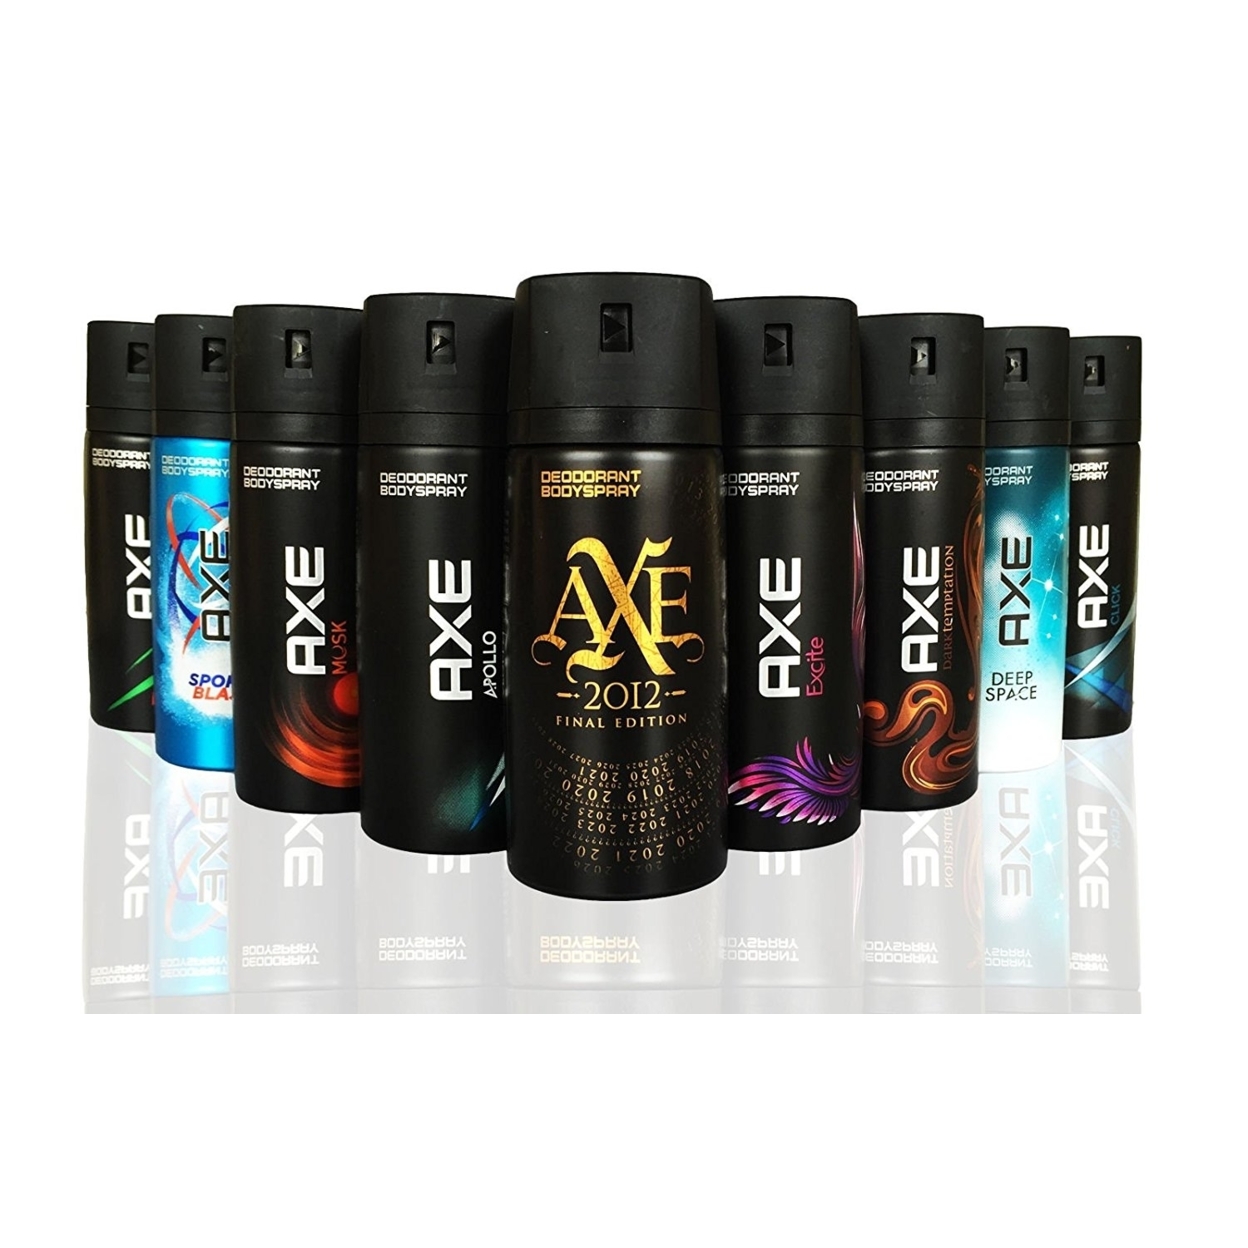 Axe Body Spray Assortment - 6 Pack